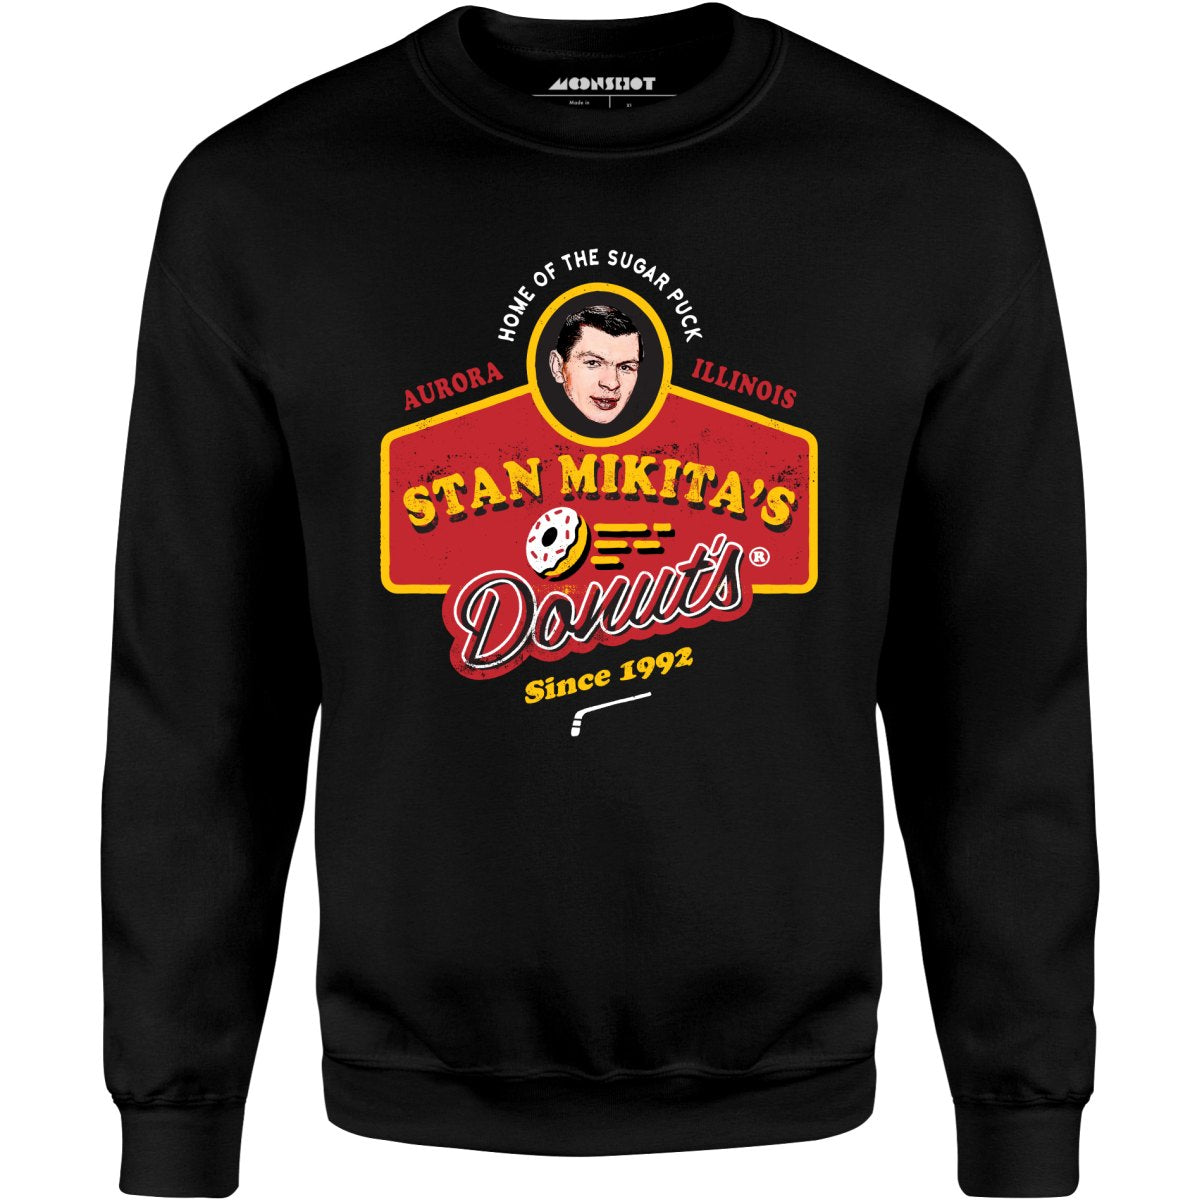 Stan Mikita's Donuts - Unisex Sweatshirt